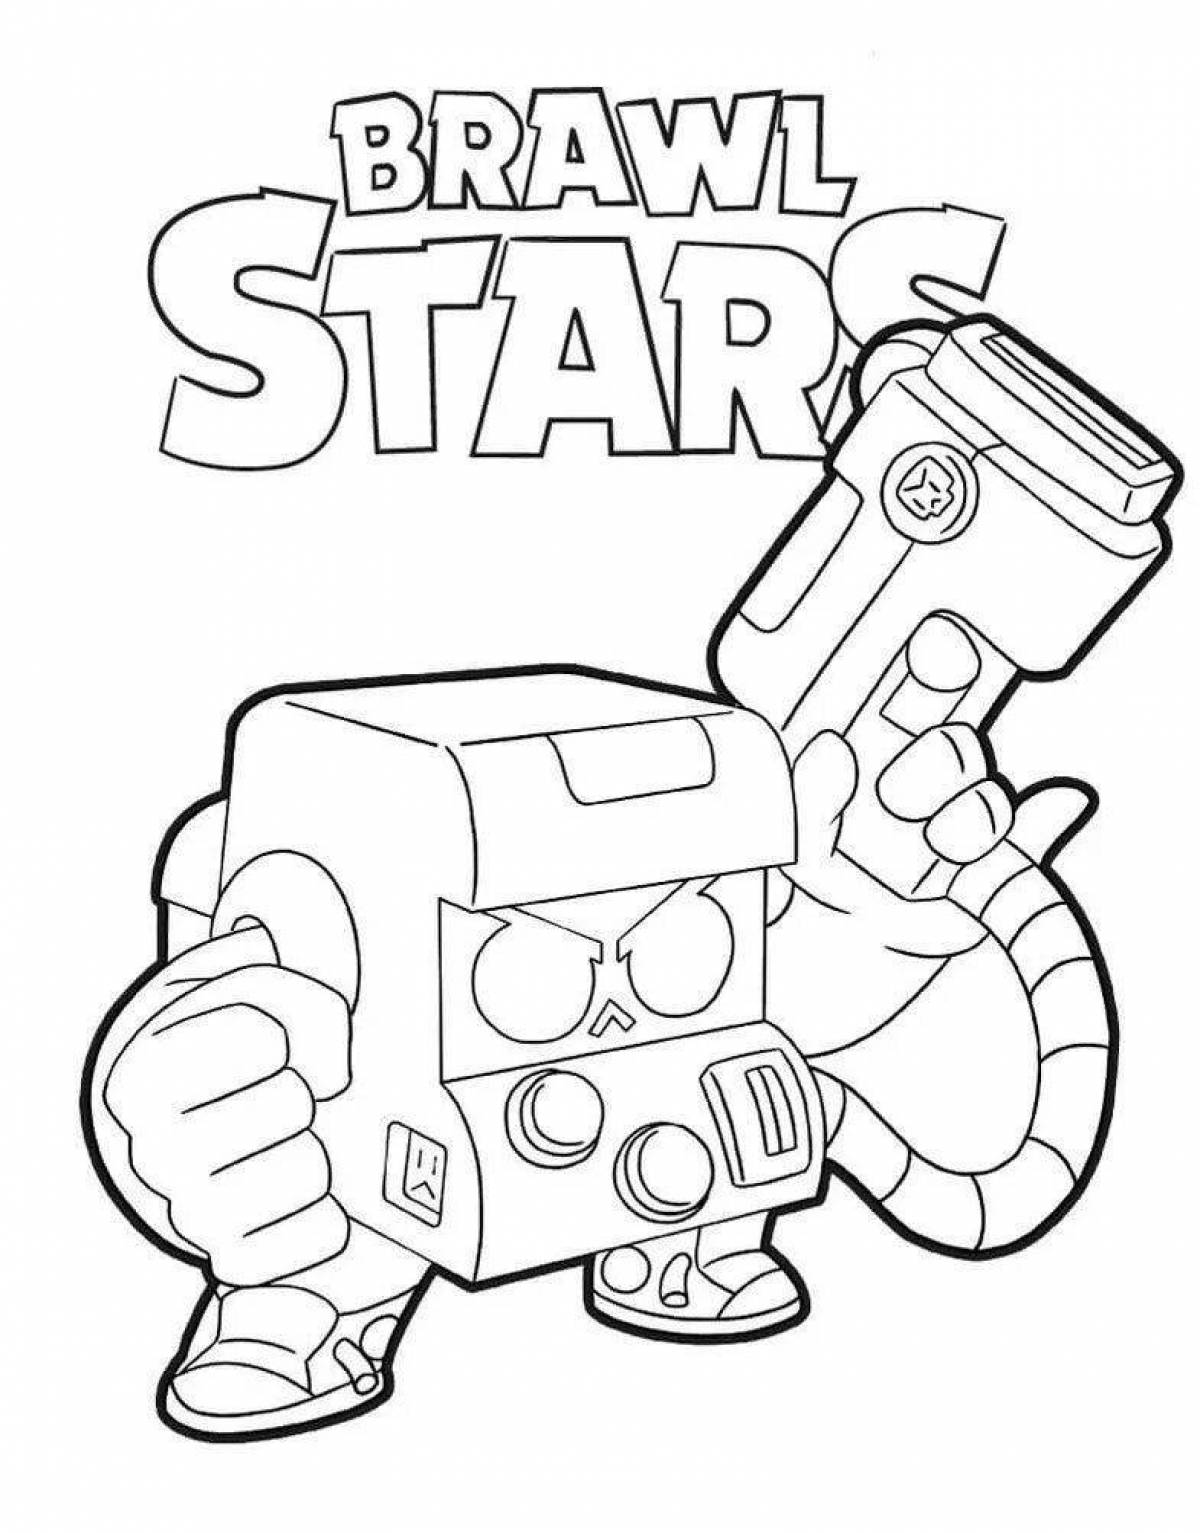 Order bravo stars #2